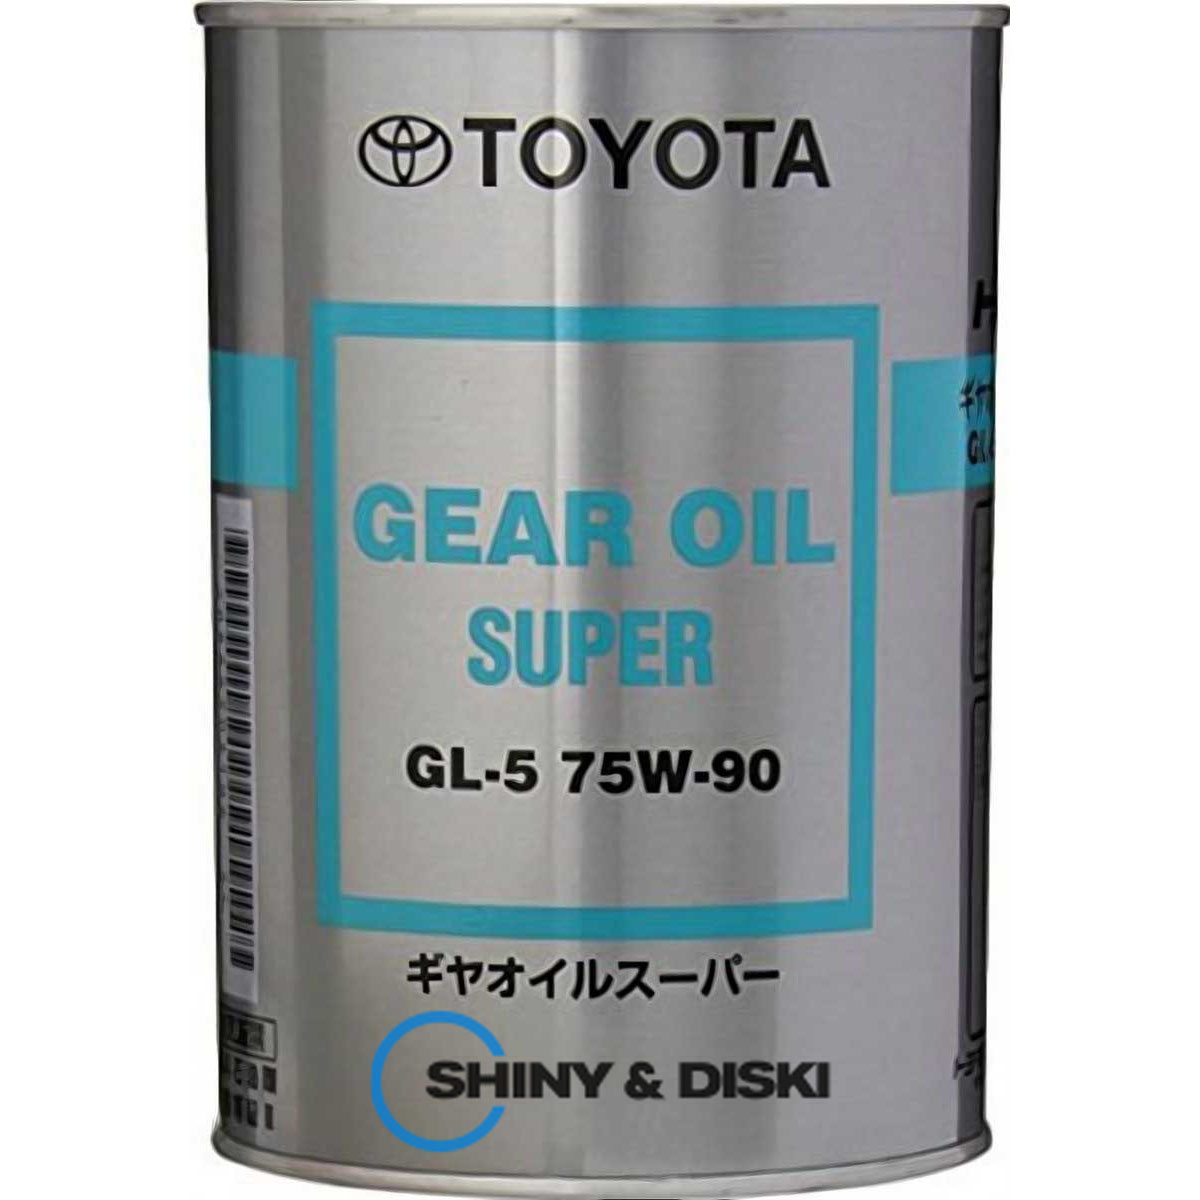 toyota gear oil super 75w-90 gl-5 (1л)